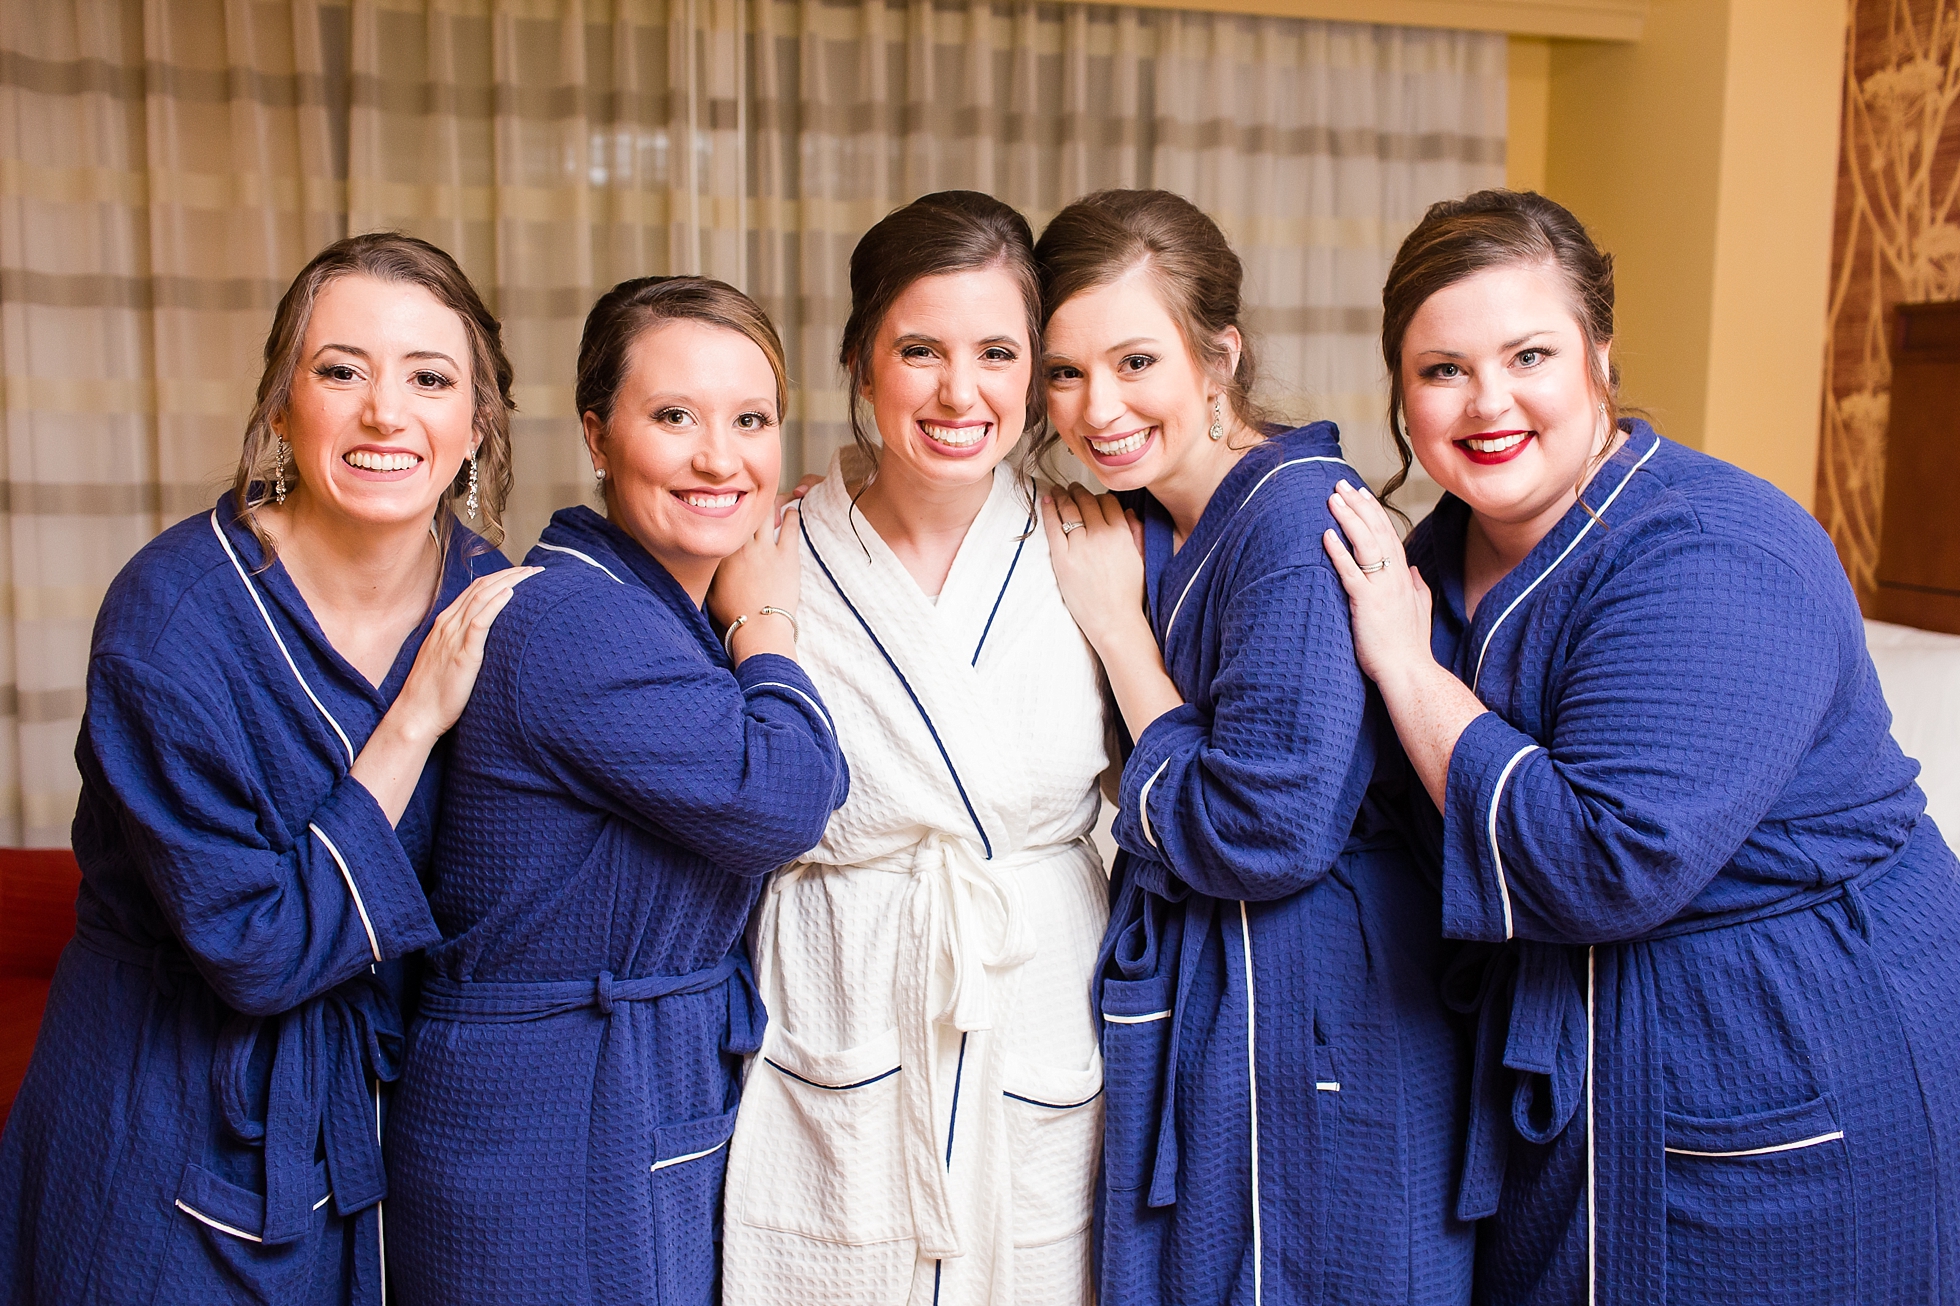 bridesmaids robes hotel wedding